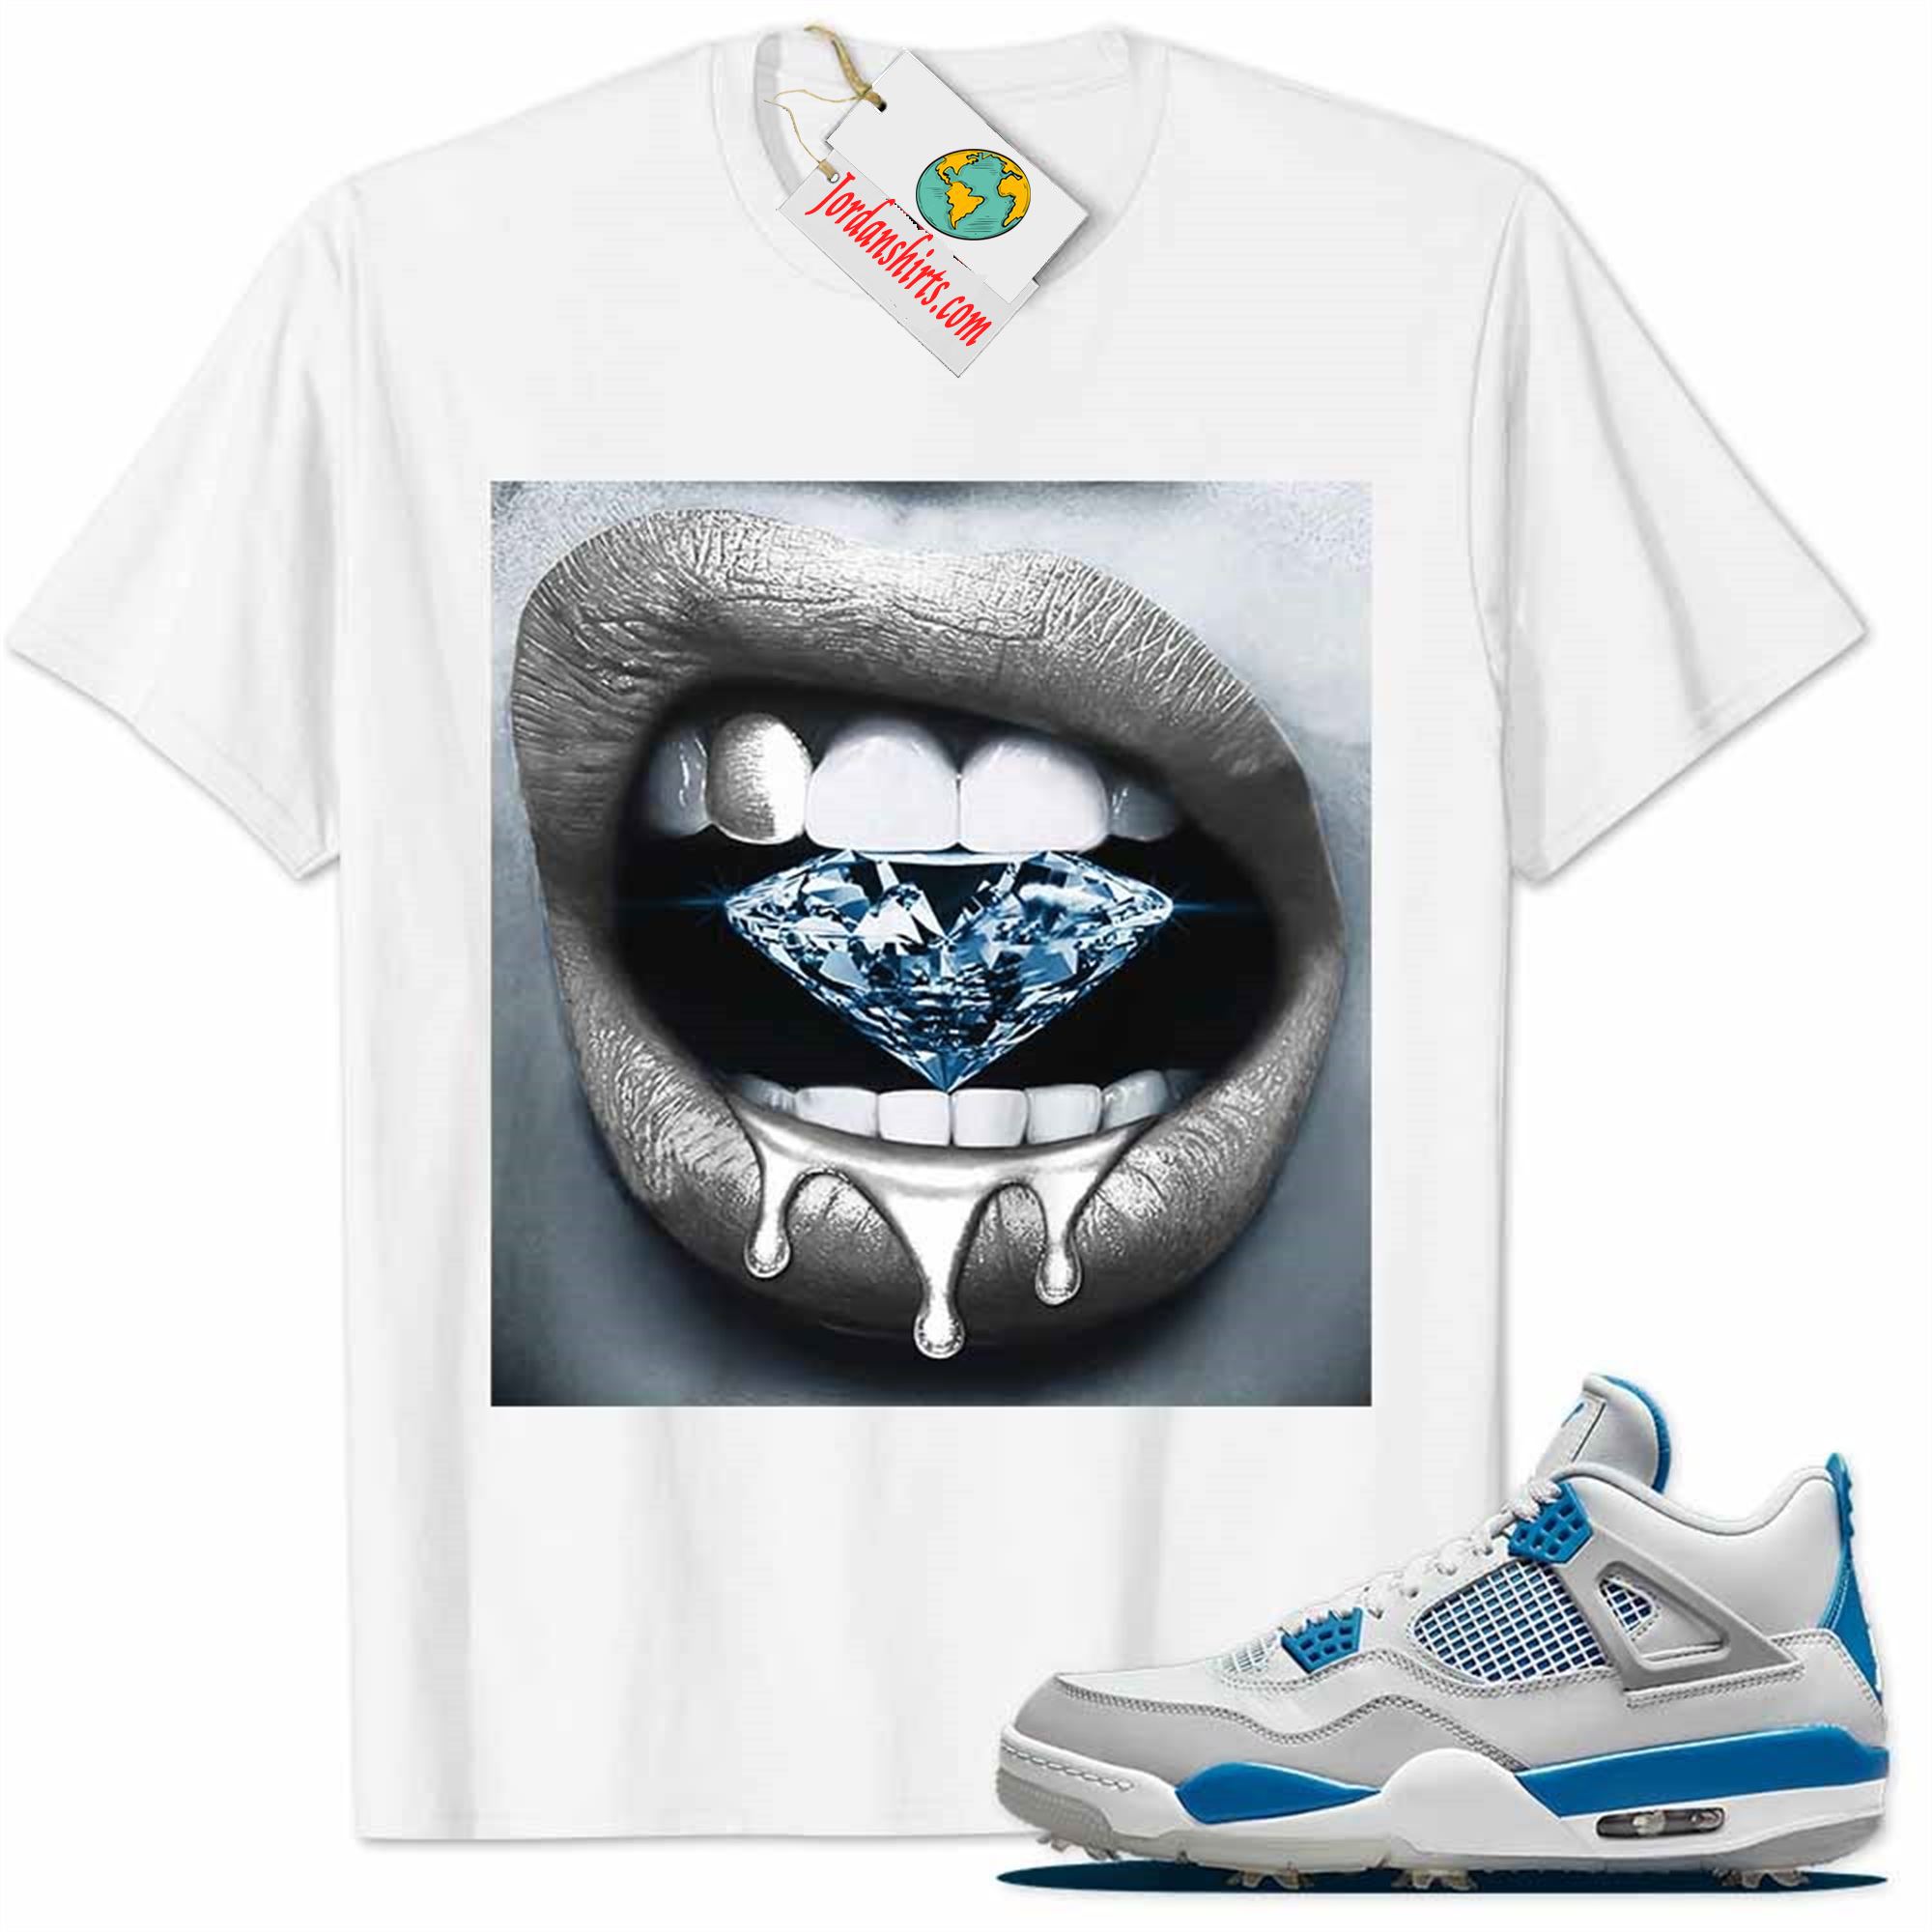 Jordan 4 Shirt, Jordan 4 Golf Military Blue Shirt Sexy Lip Bite Diamond Dripping White Full Size Up To 5xl